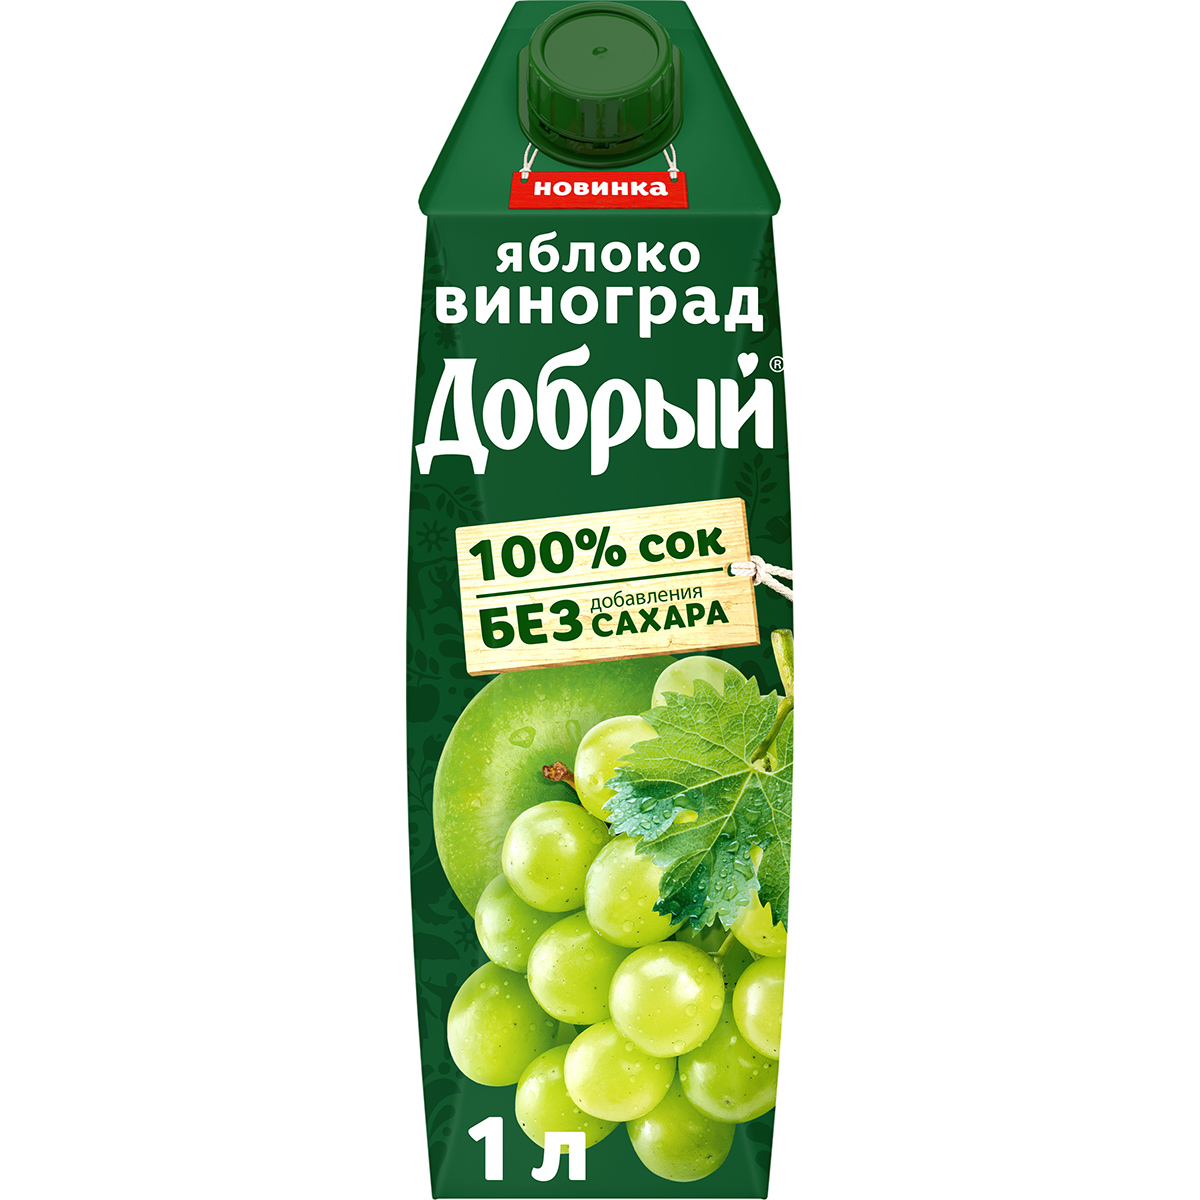 Сок Добрый Яблоко-виноград 1 л сок добрый яблоко 2 л